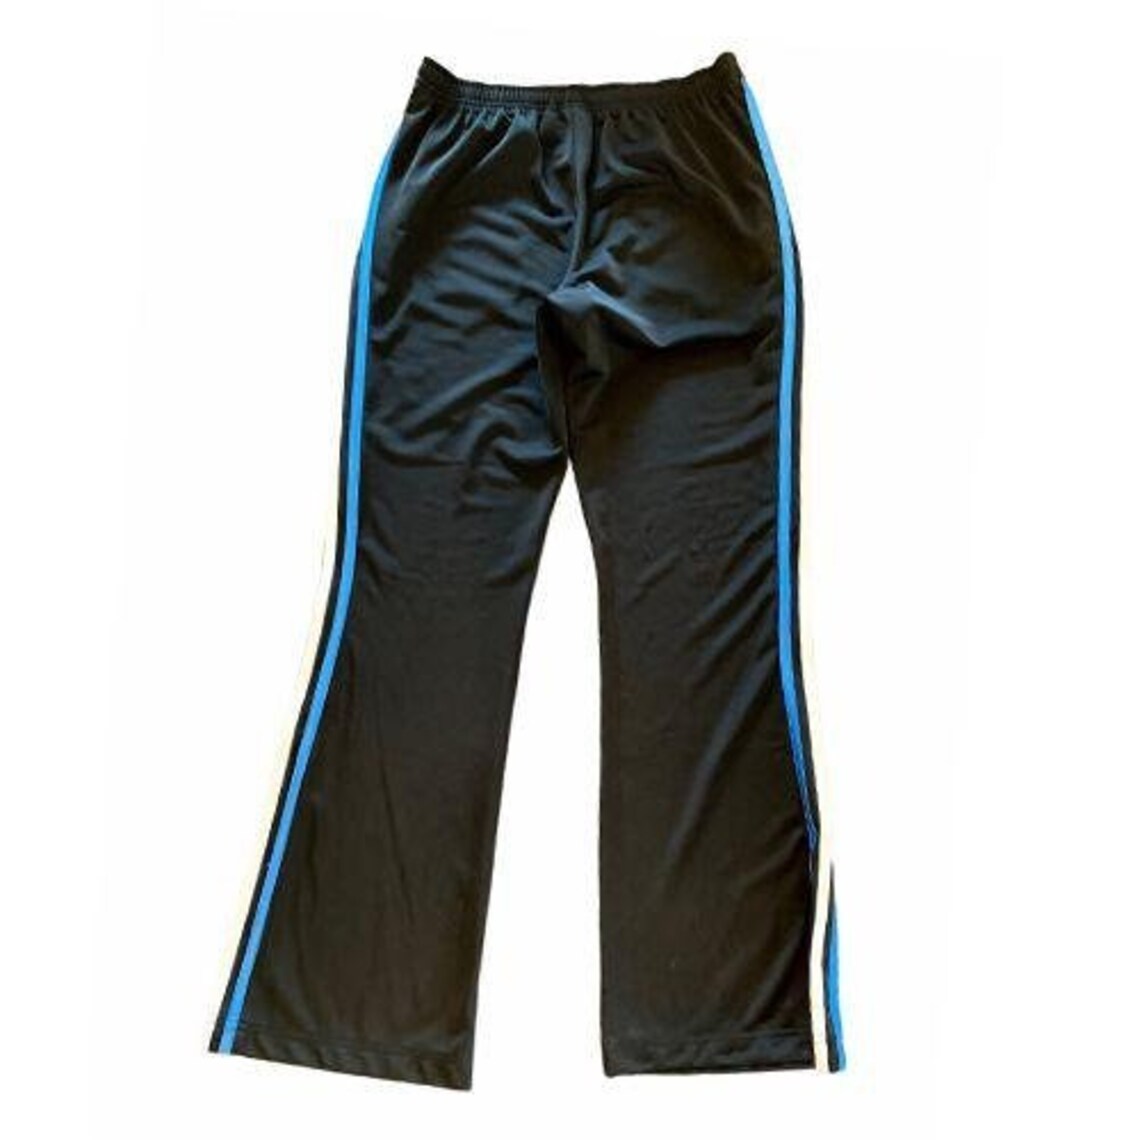 Adidas Y2K Track Suit Black Blue 3 Stripe VTG Style Size S | Etsy